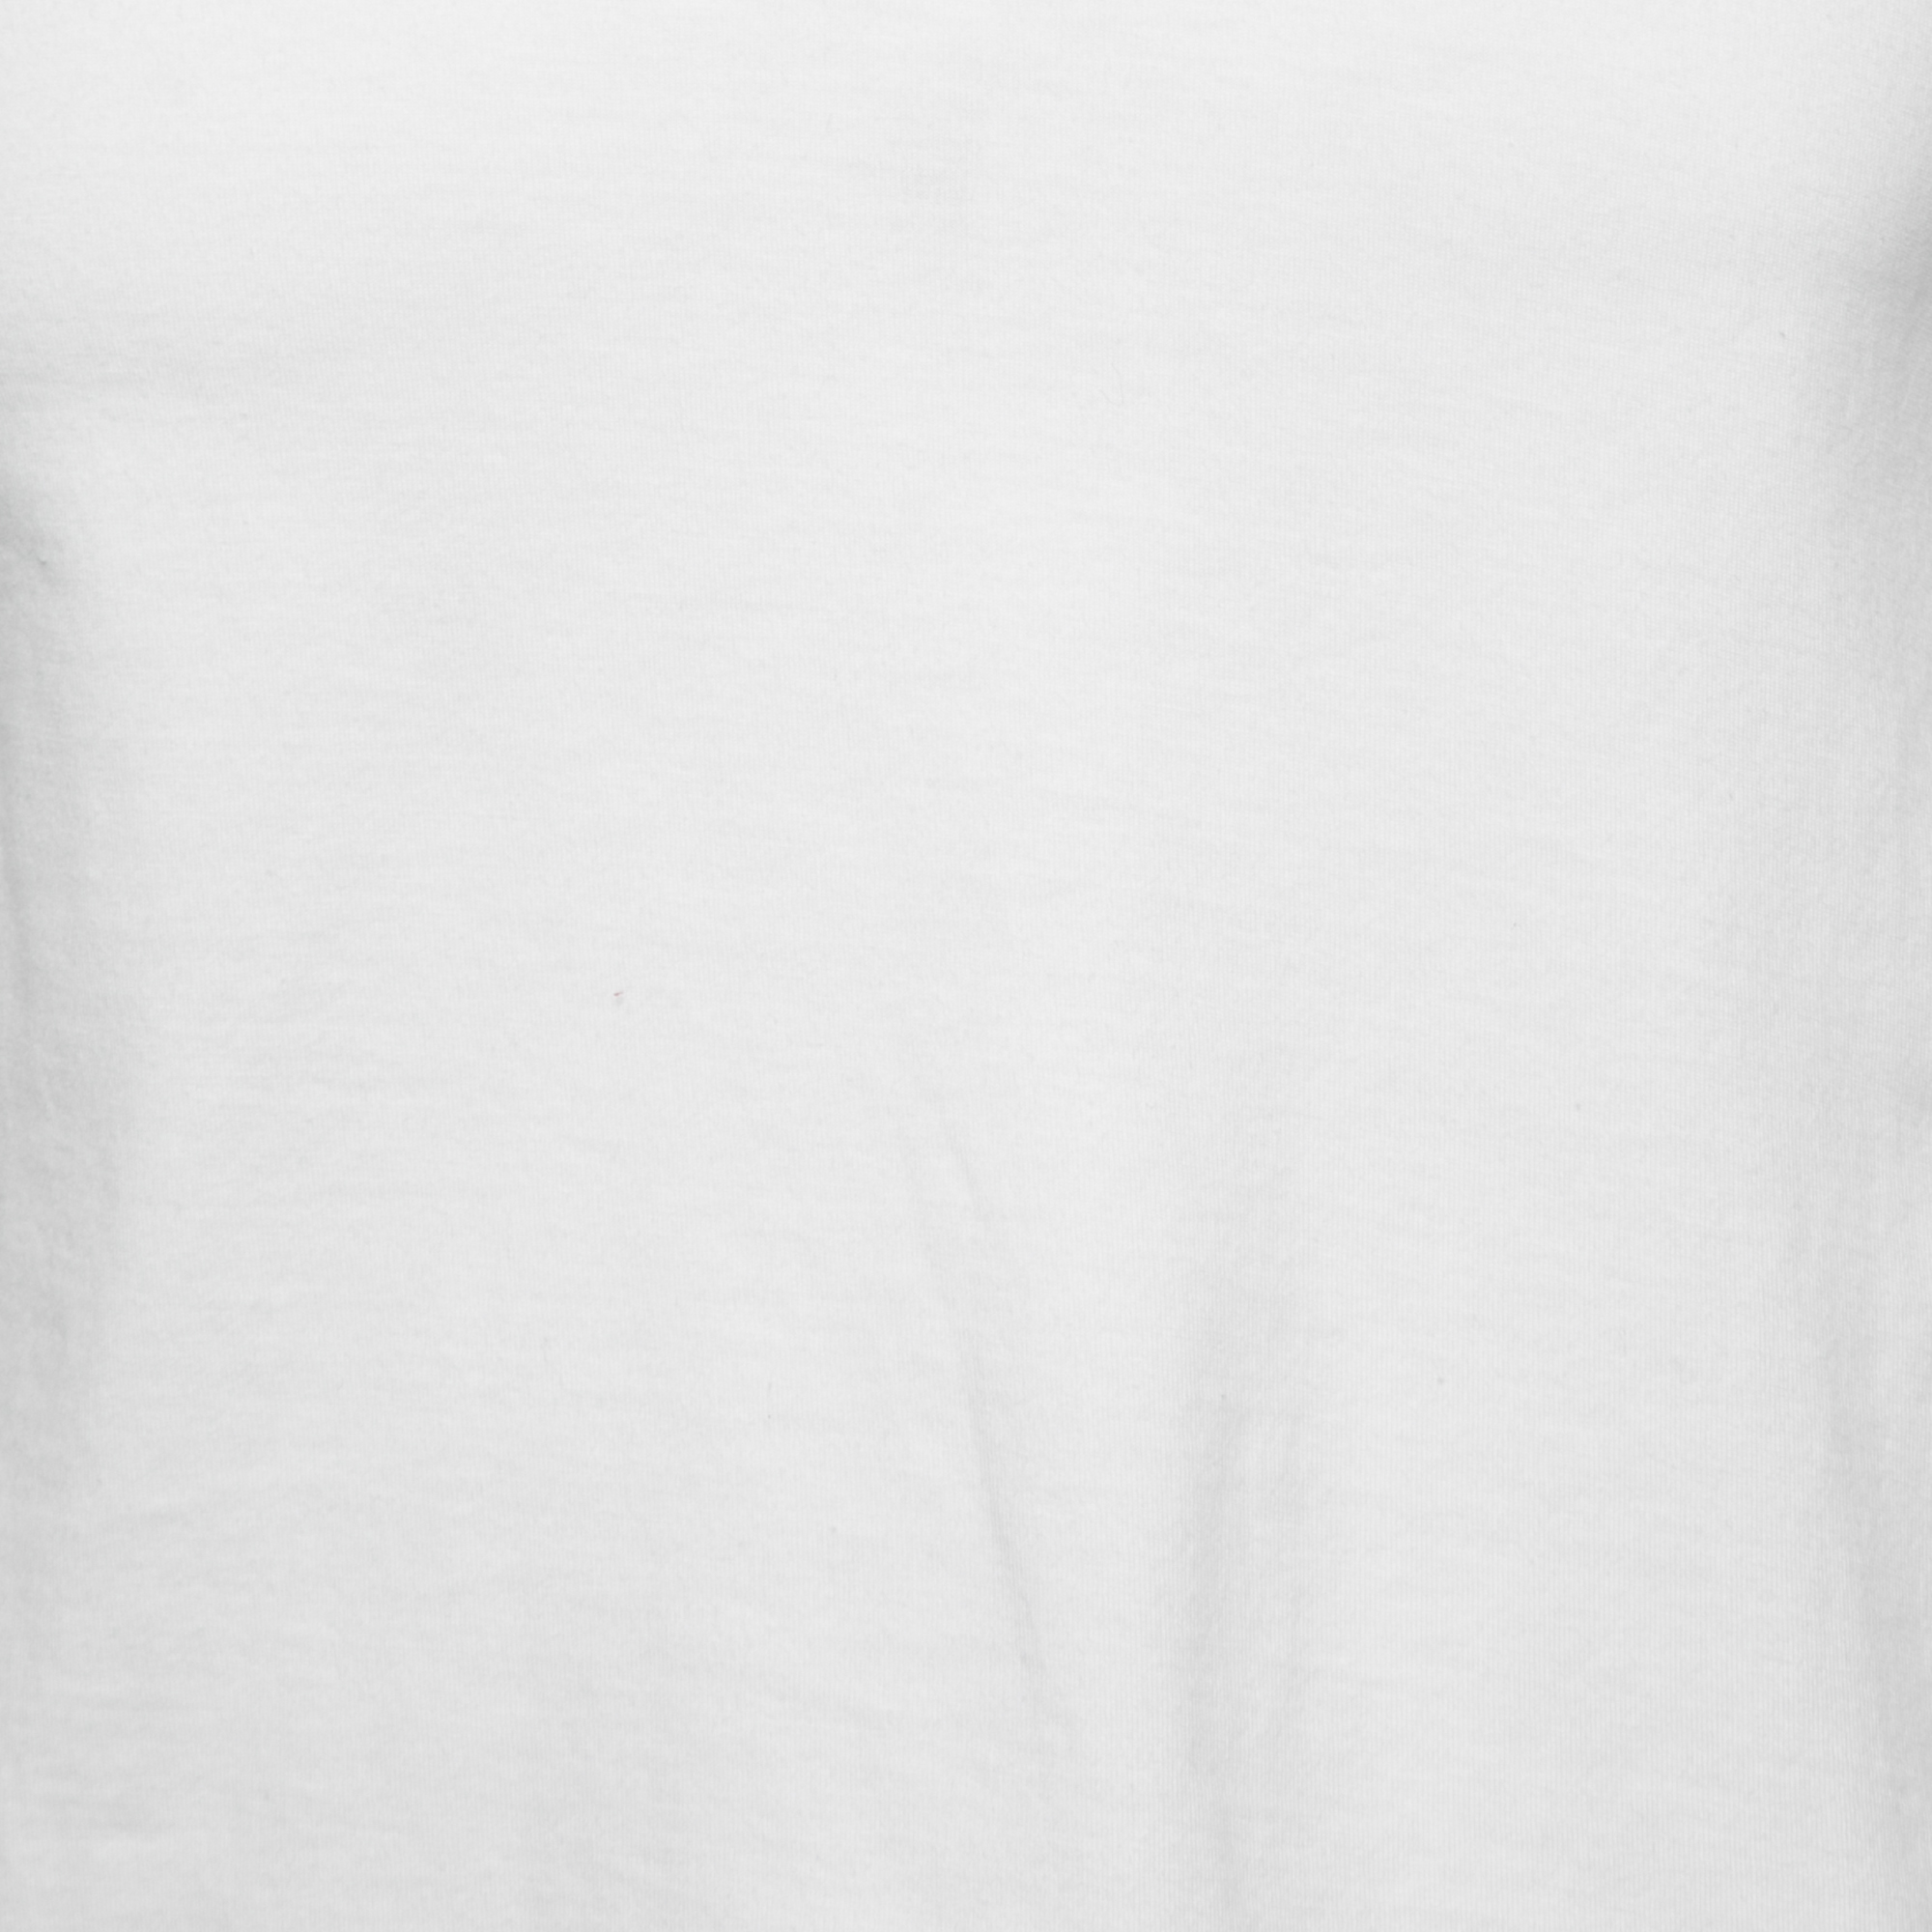 Alexander McQueen White Snake Print Cotton V-Neck T-Shirt XS